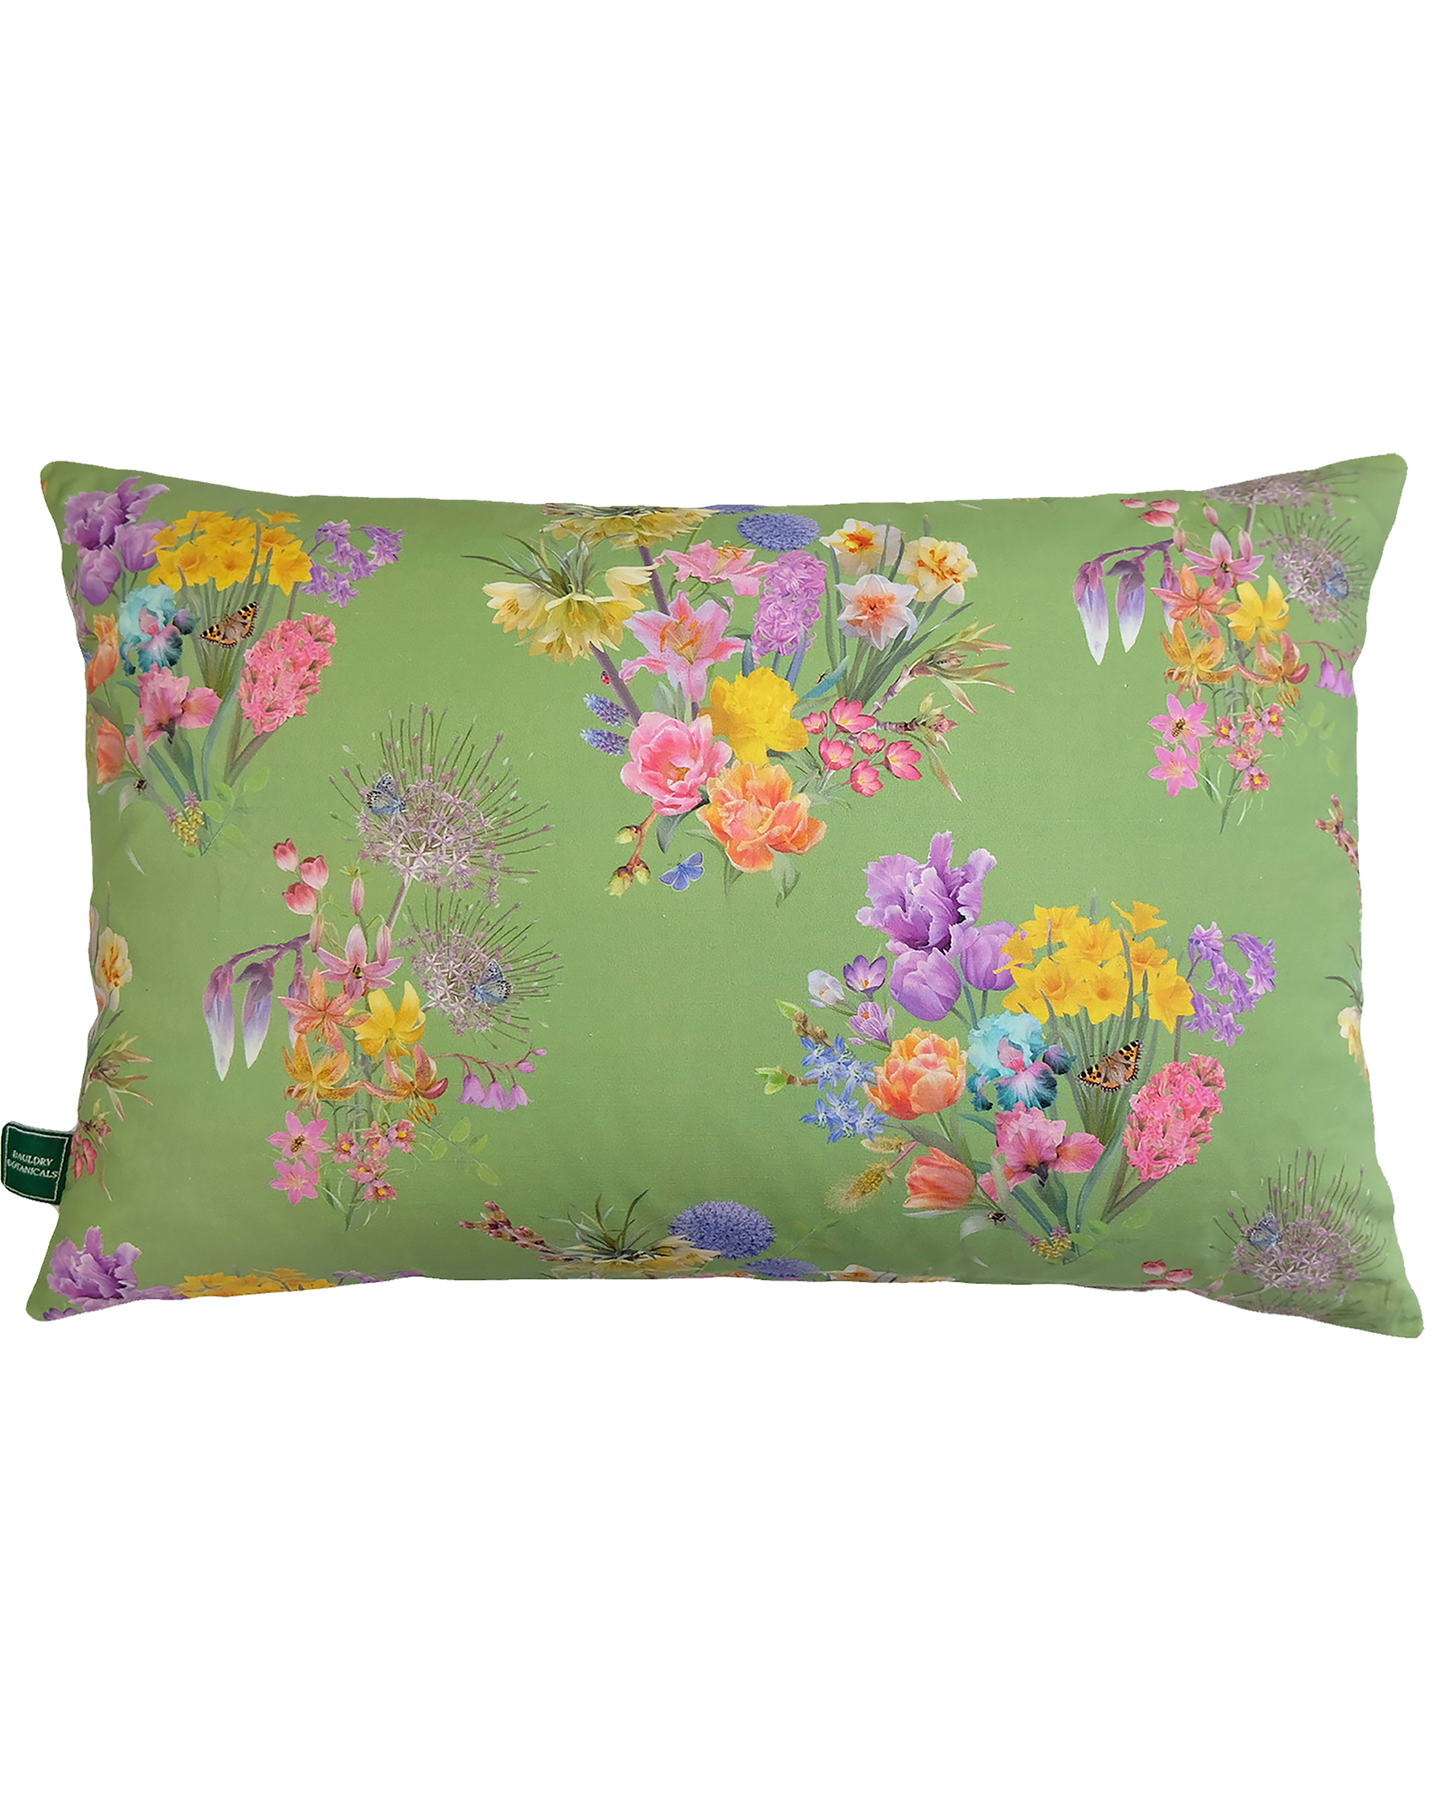 Bright green hemp cushion for uplifting eco friendly home decor ideas with luxury botanical print